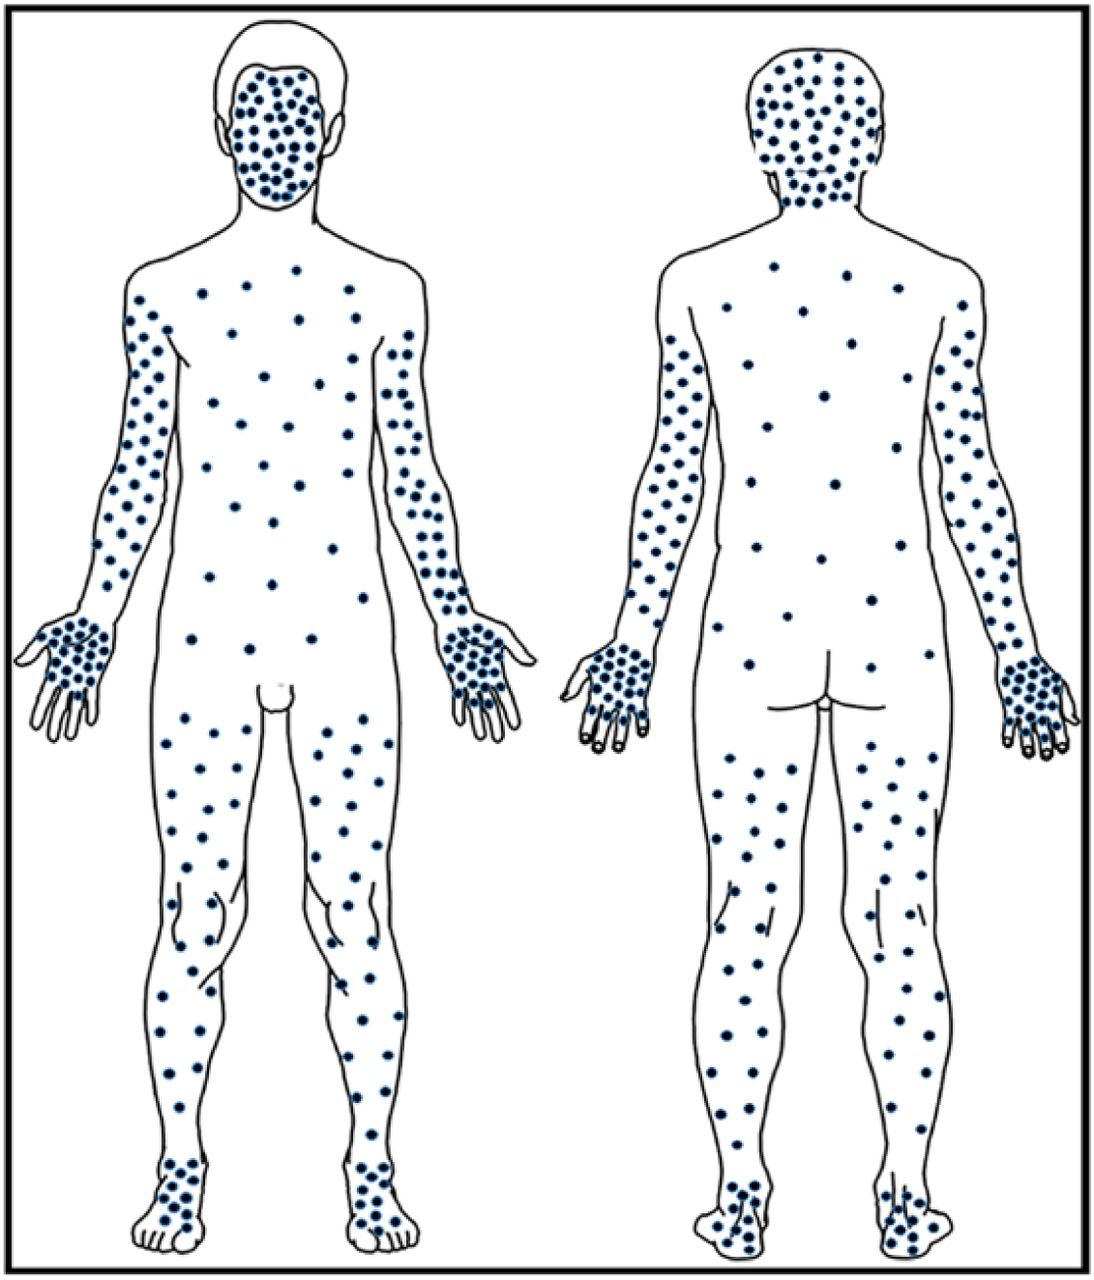 Study describes monkeypox in women; CDC warns of Tpoxx resistance